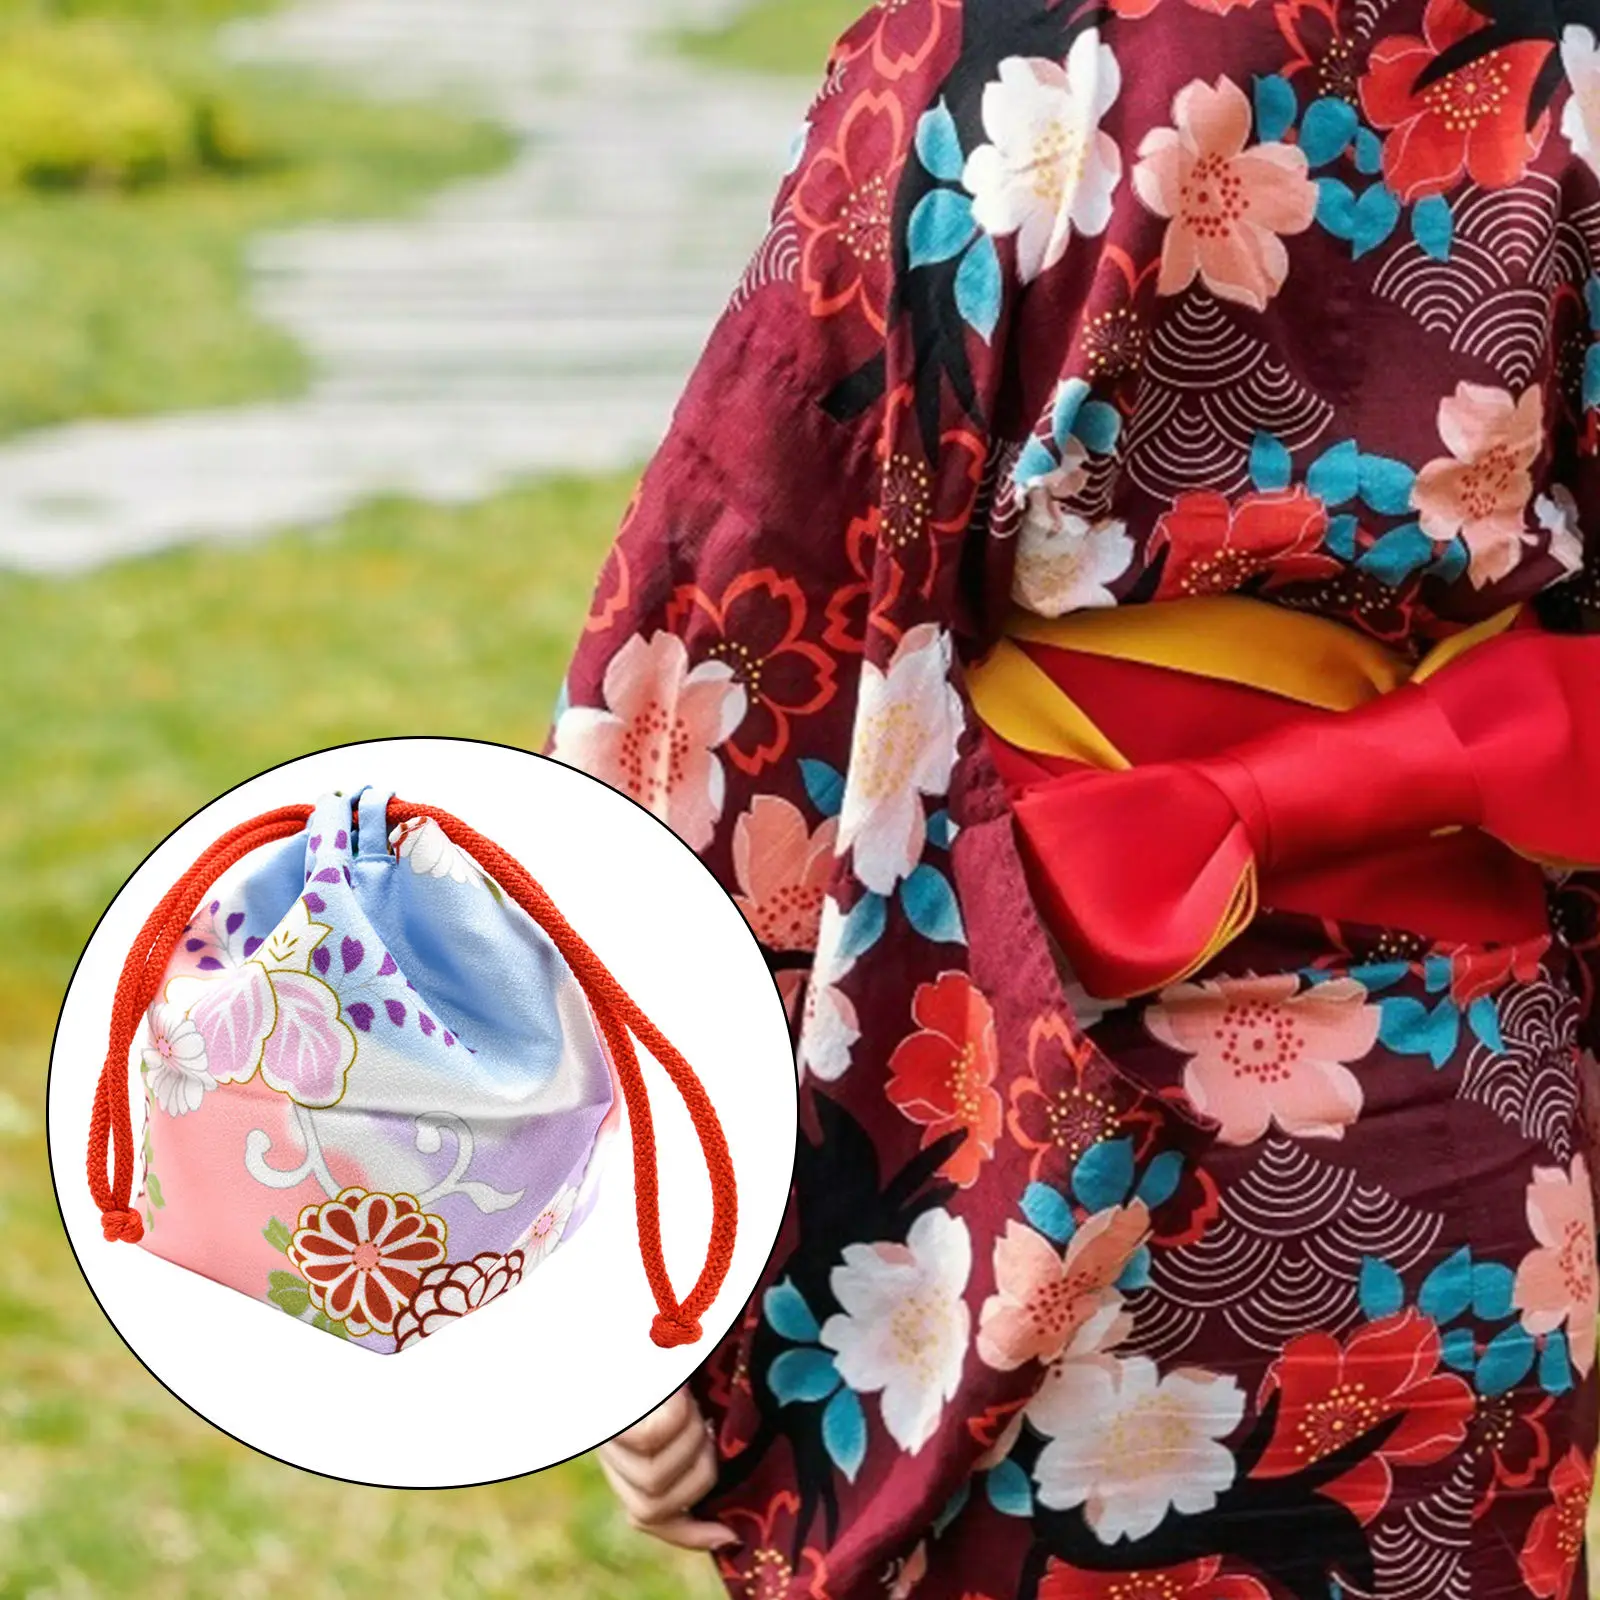 Sakura Japanese Drawstring Bag Girls Yukata Robe Wedding Cosplay Travel Cosmetic Coin Purse Home Lunch Bag Handbag Phone Pouch